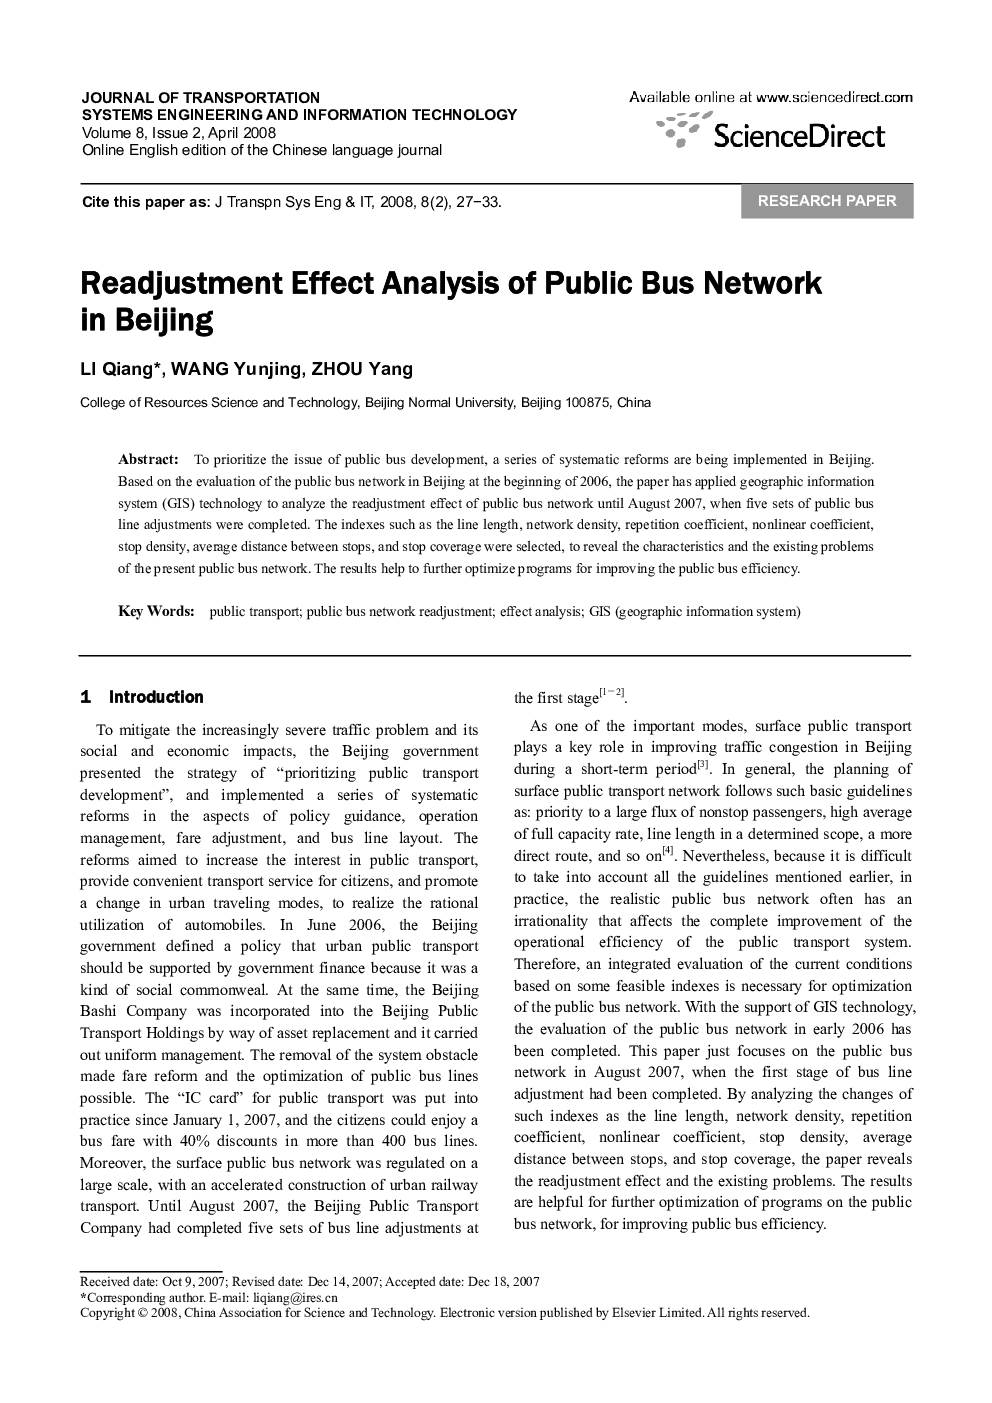 Readjustment Effect Analysis of Public Bus Network in Beijing